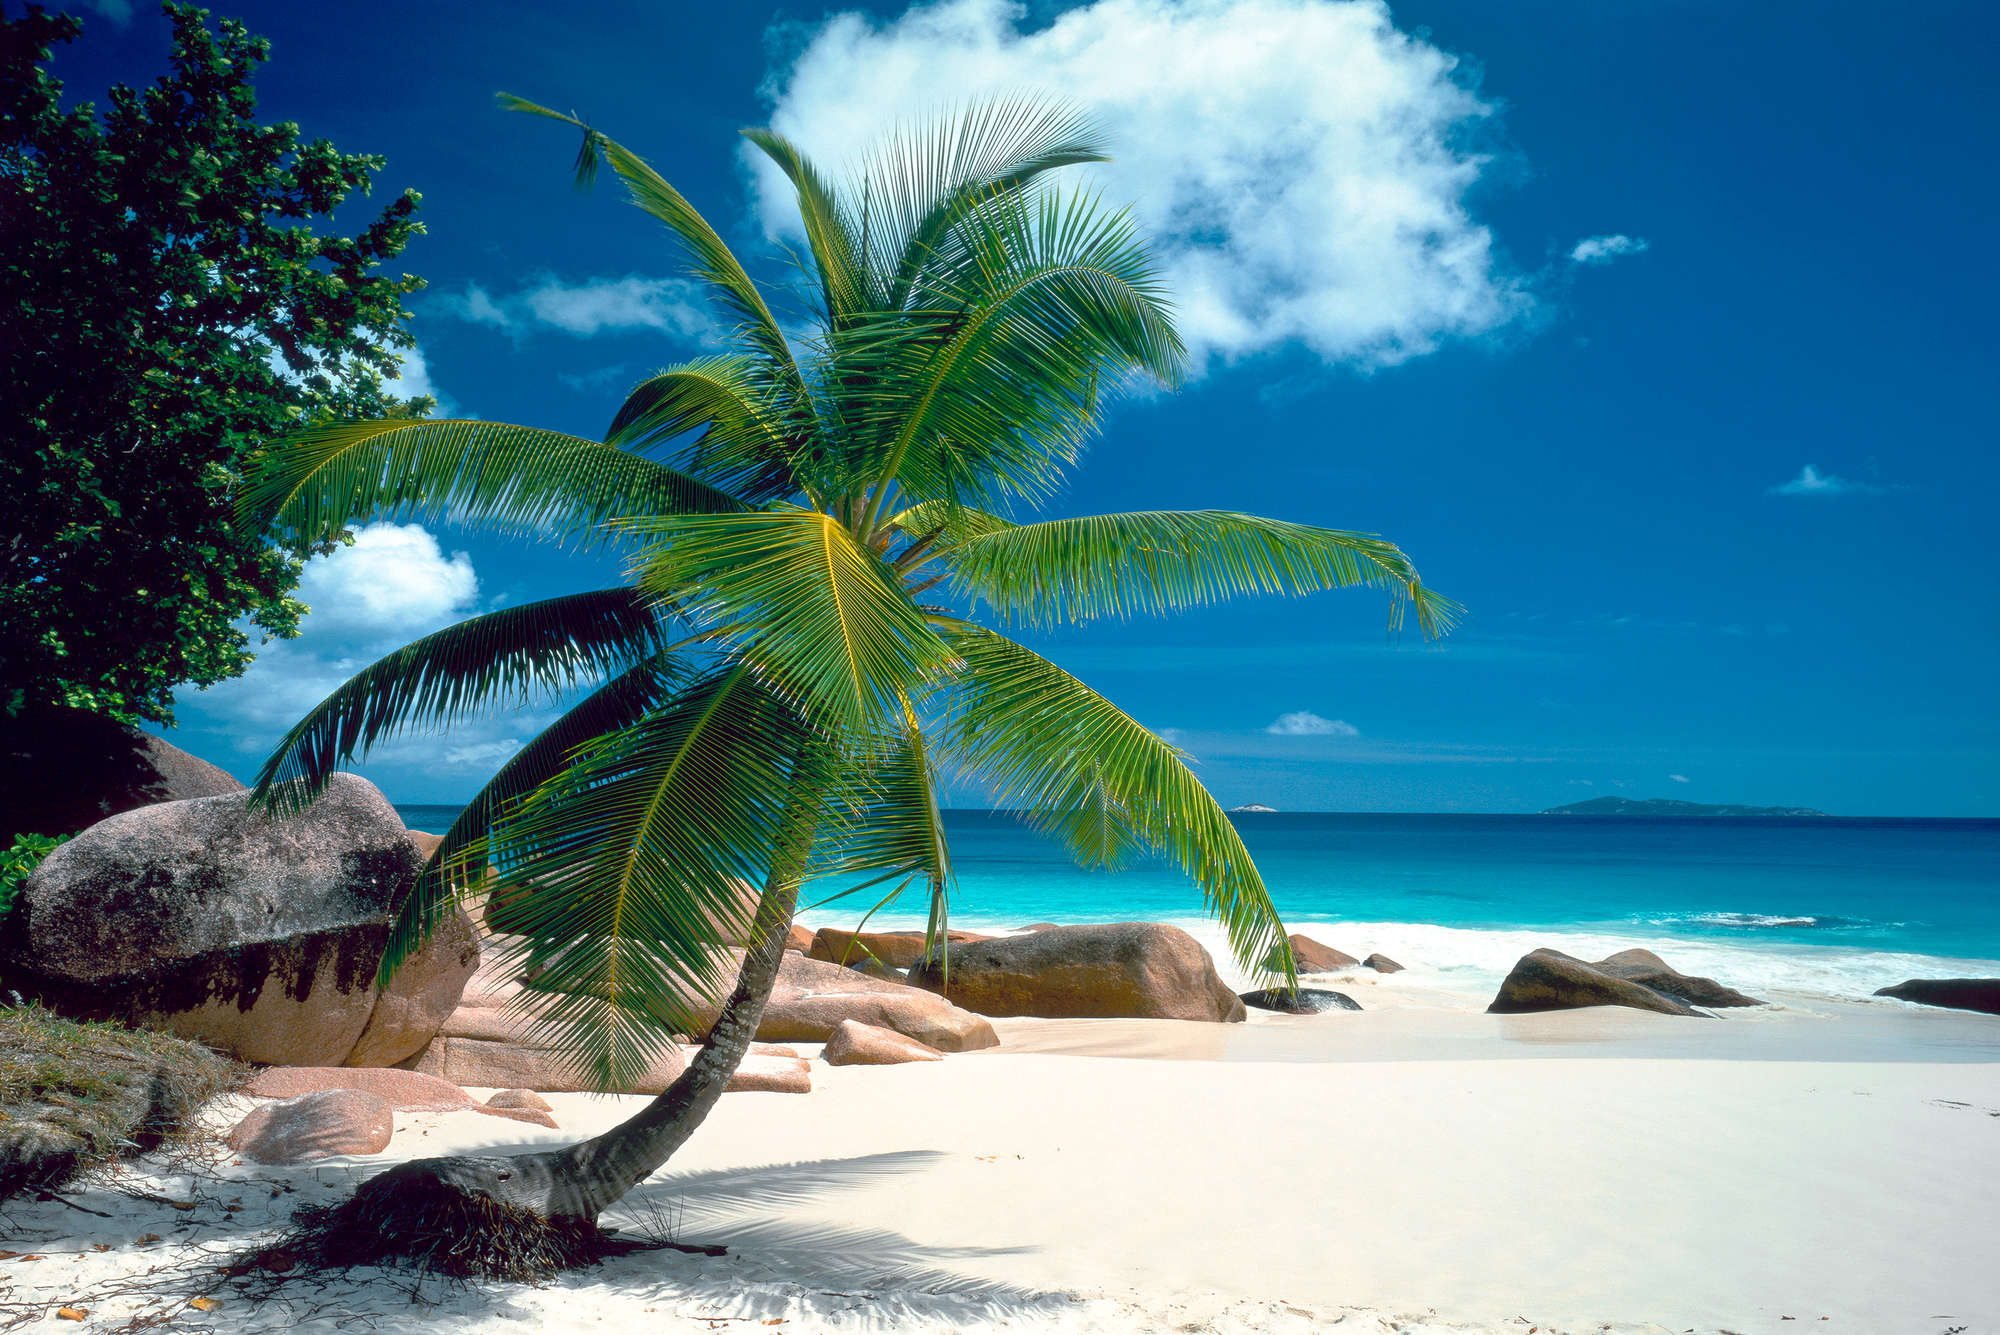             Strand Fototapete Palme mit blauem Meer auf Premium Glattvlies
        